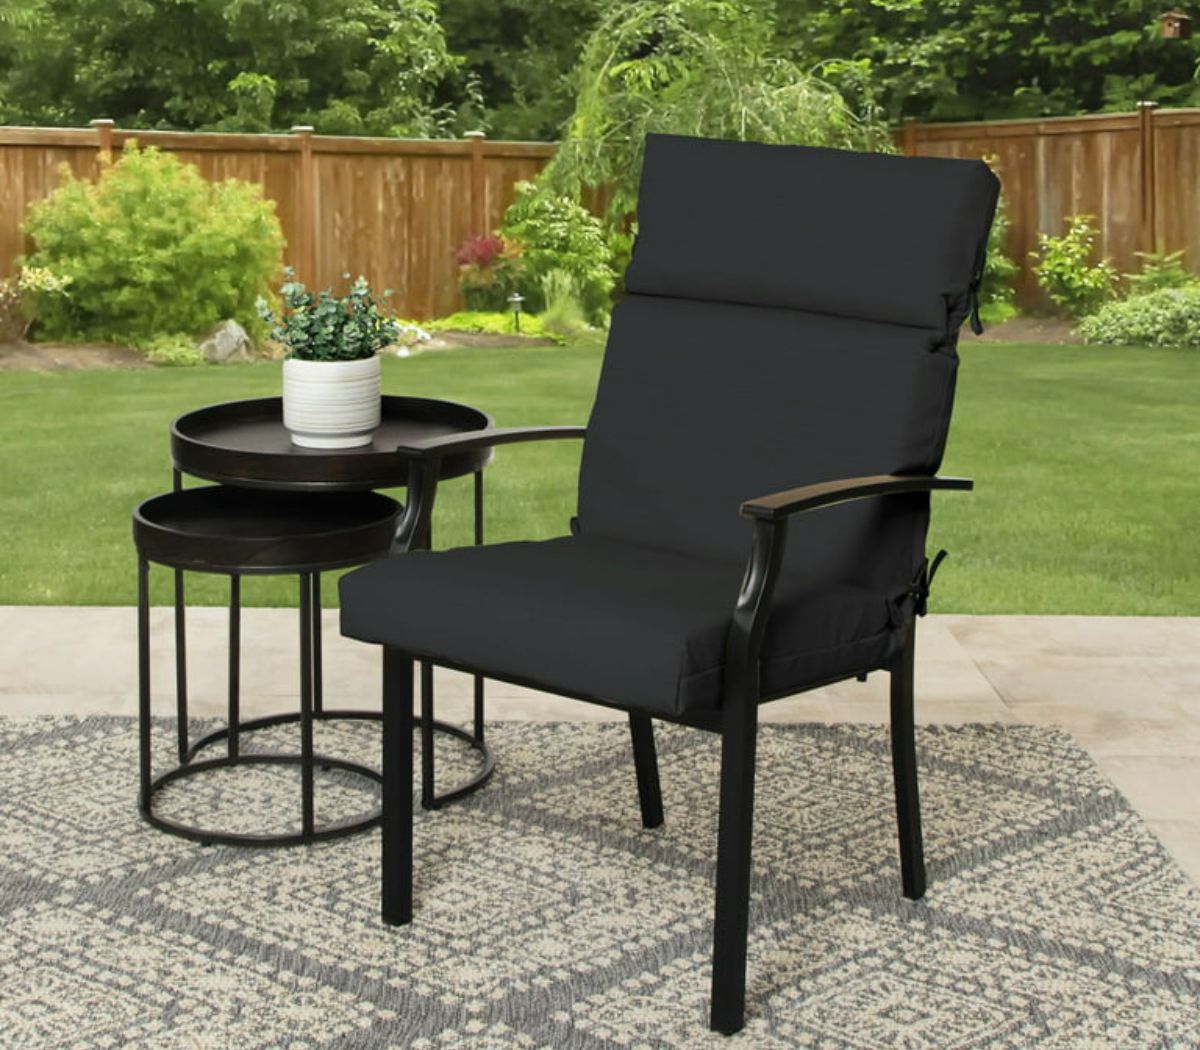 Better Homes & Gardens Outdoor Chair Cushion